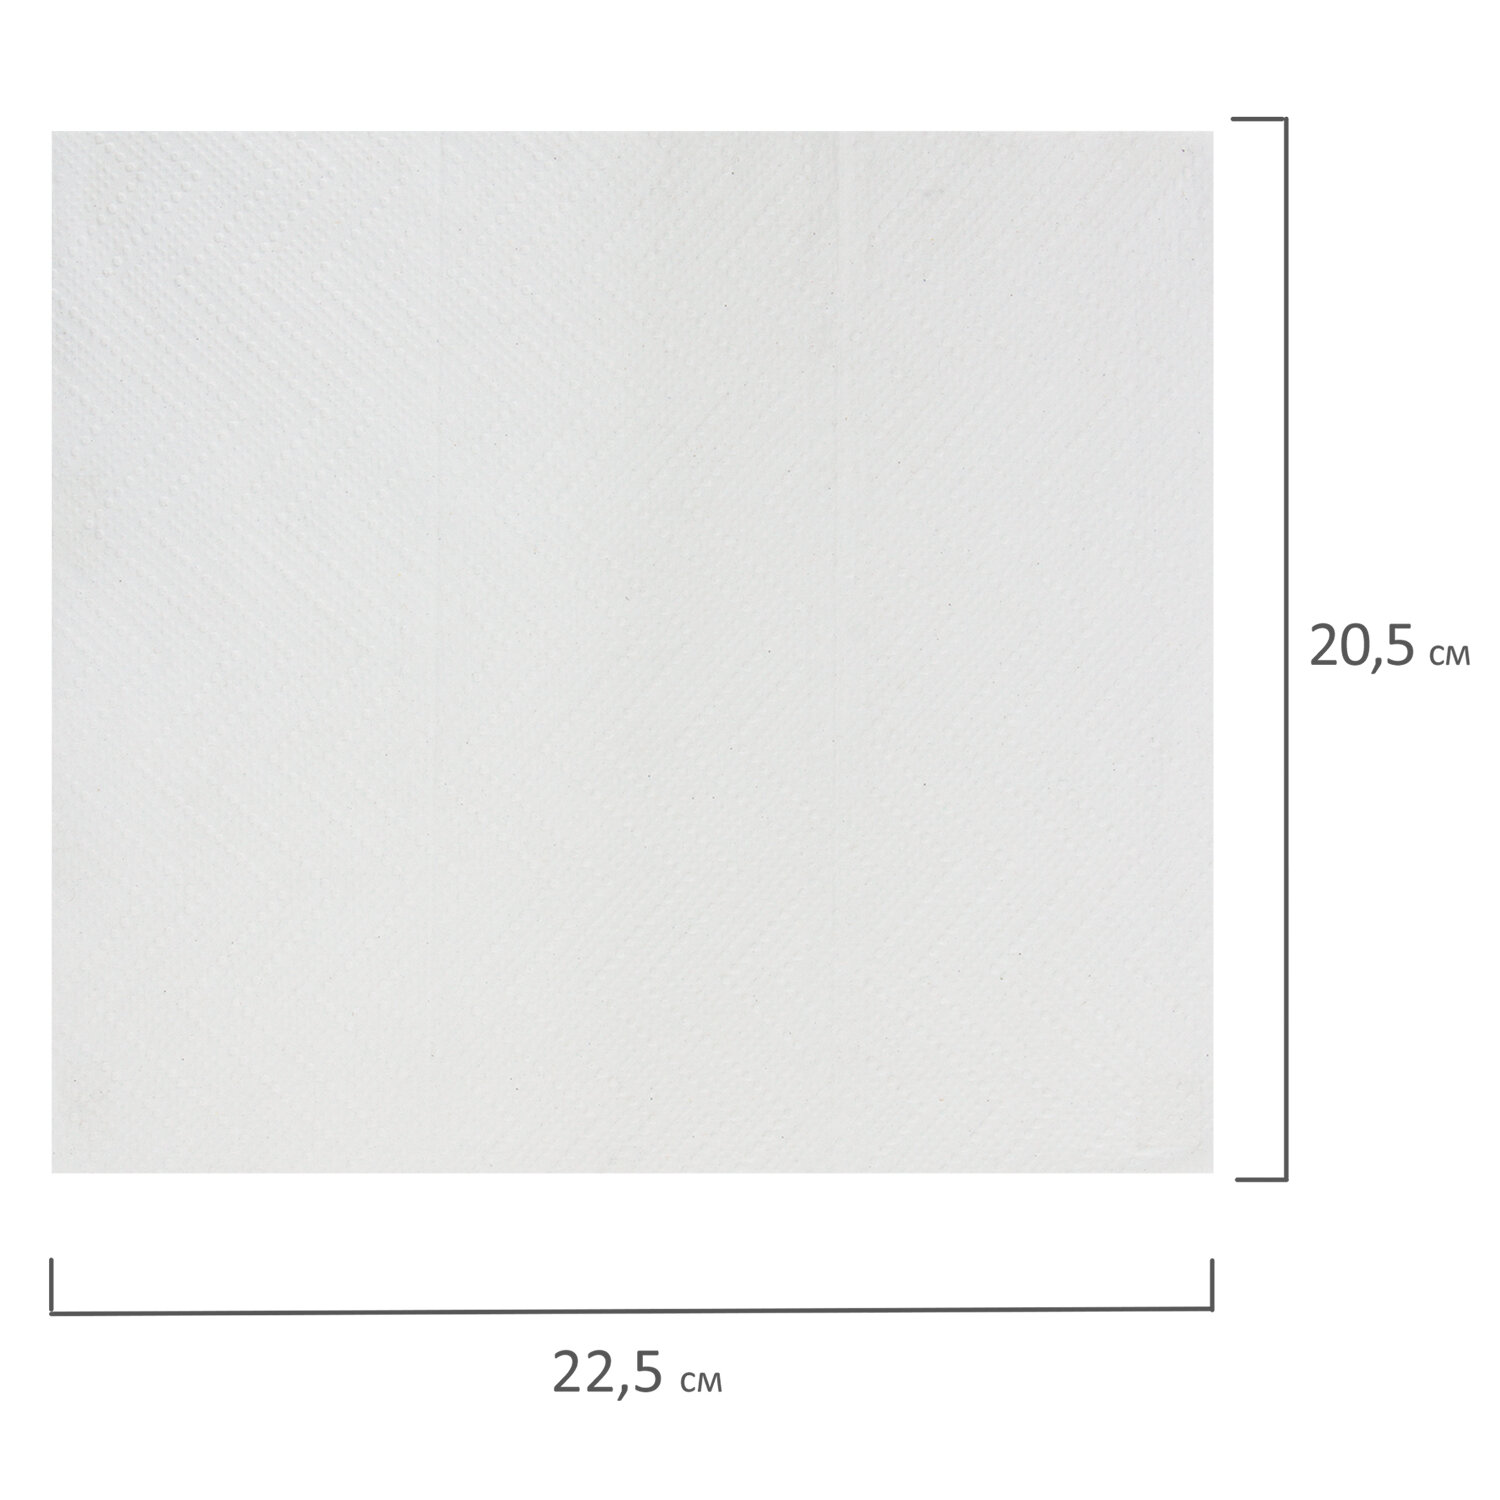 Полотенца бумажные 190 шт., LAIMA (Система H2) UNIVERSAL WHITE, 1-слойные, белые, КОМПЛЕКТ 21 пачка,